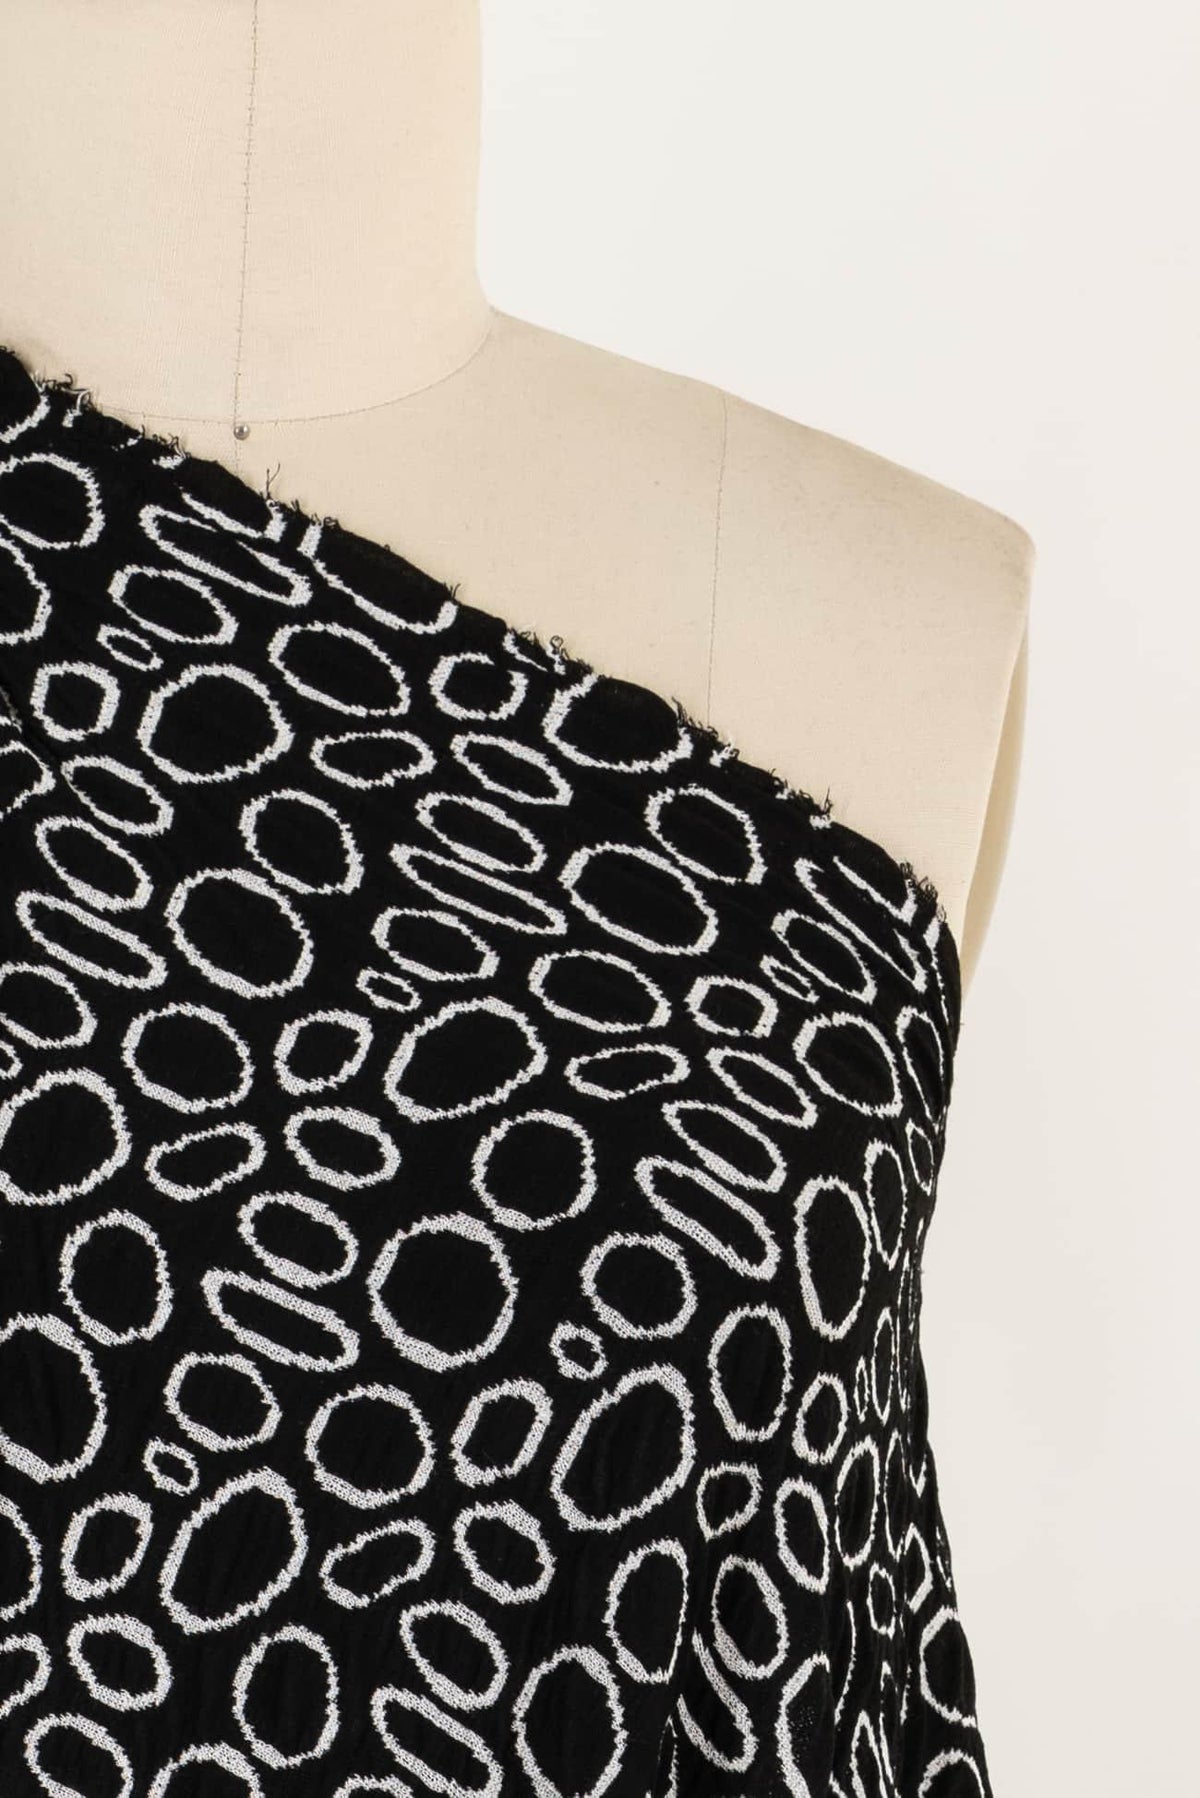 Ring Road Double Knit - Marcy Tilton Fabrics